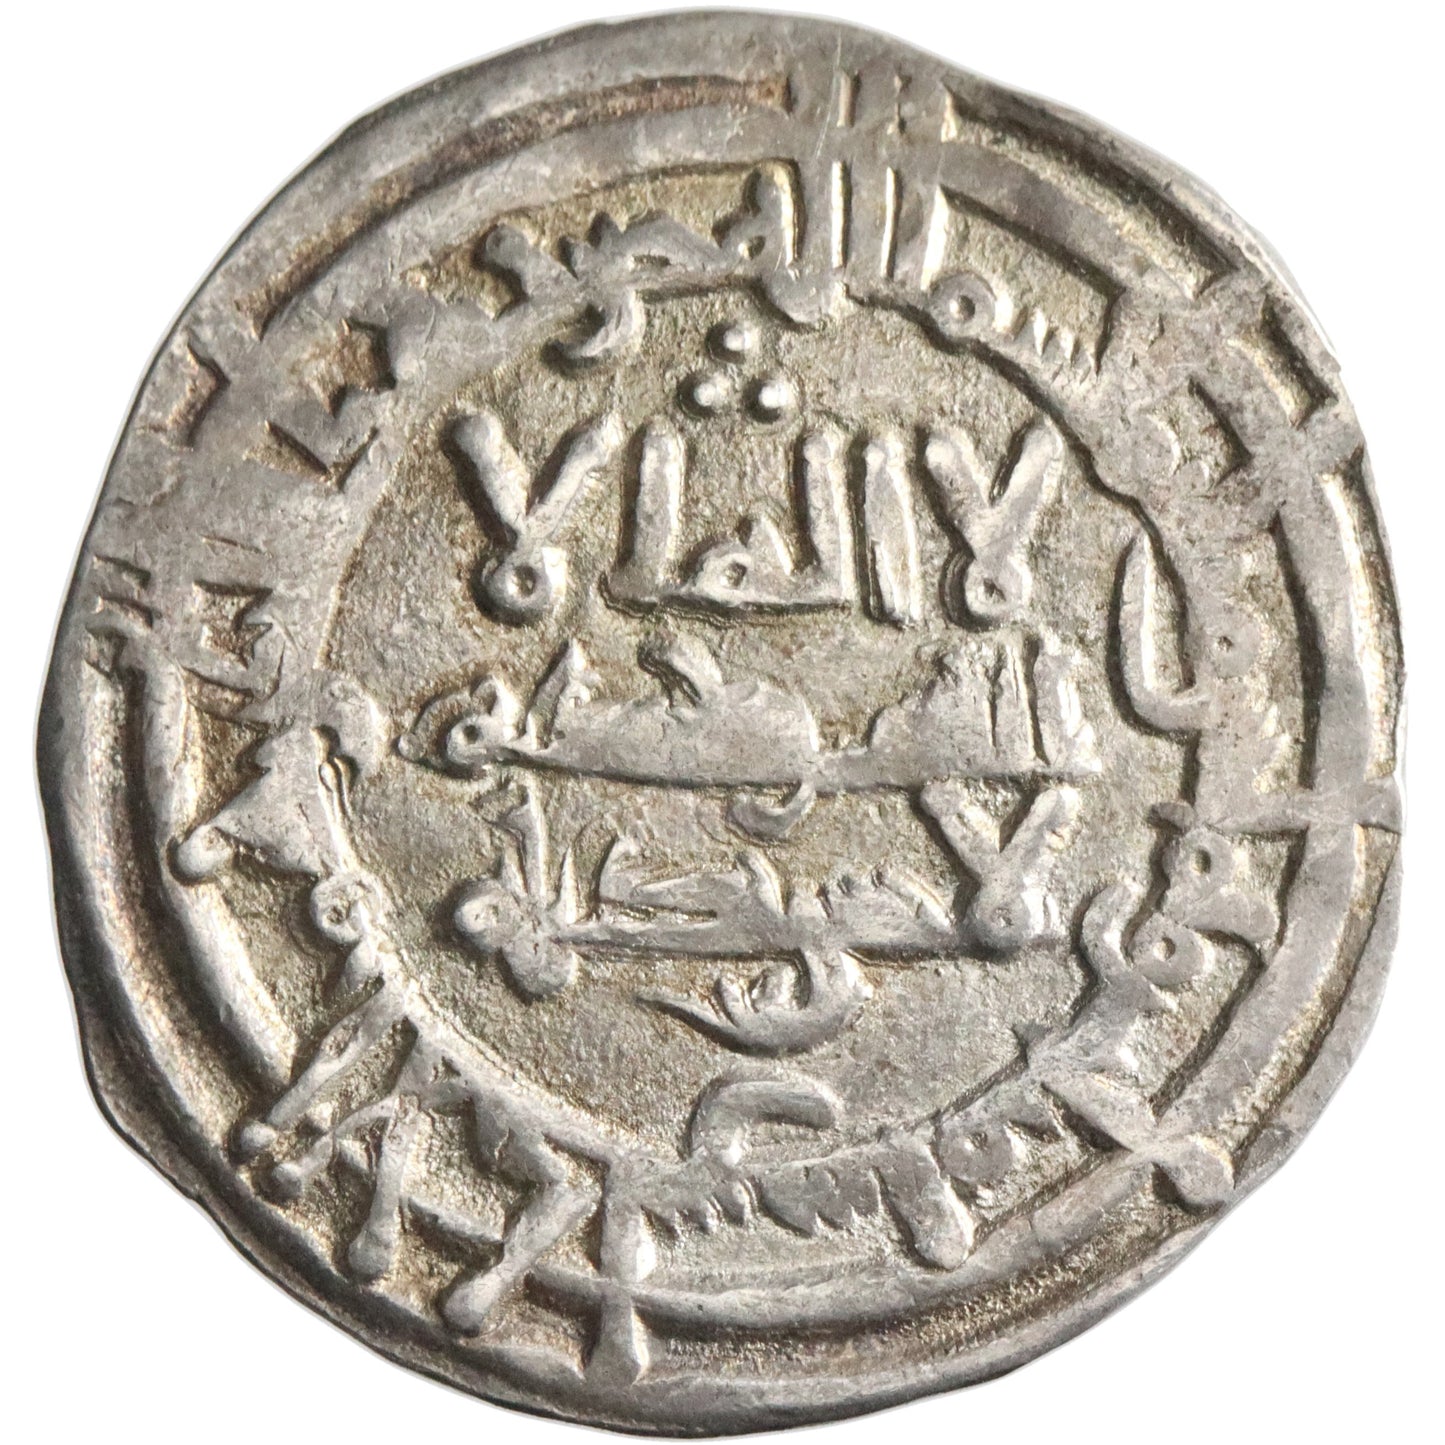 Umayyad of Spain, Hisham II, silver dirham, al-Andalus (Spain) mint, AH 383, citing 'Amir